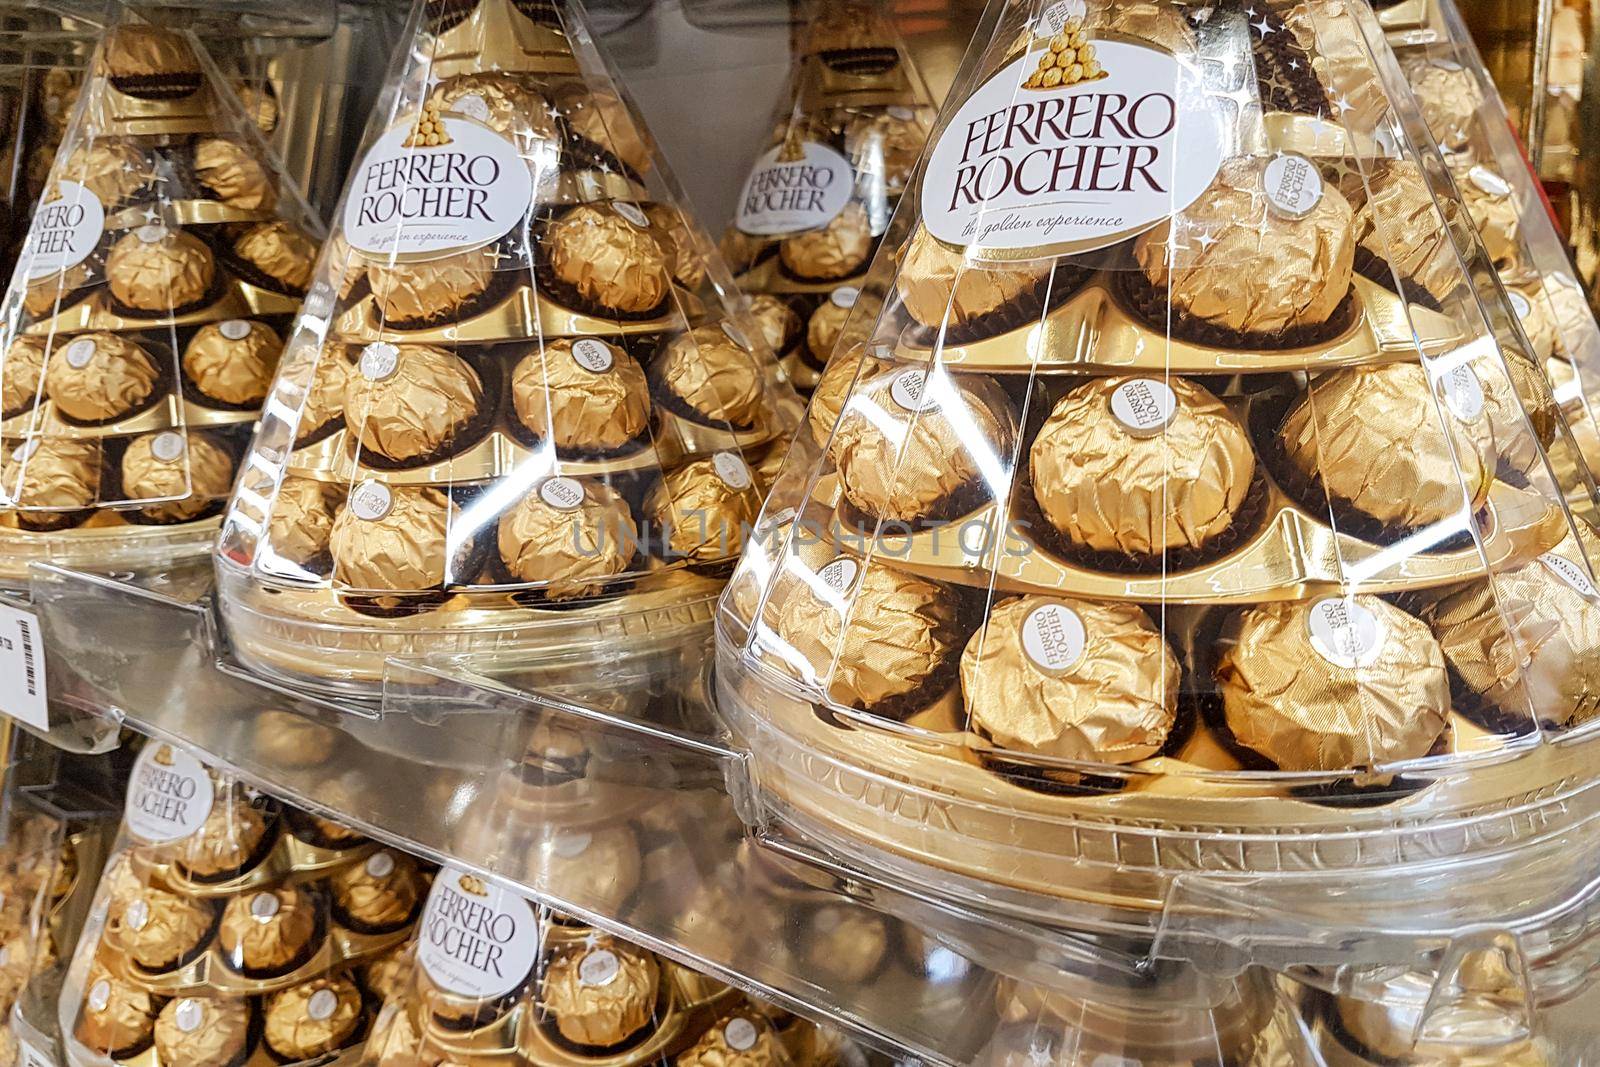 Nowy Sacz, Poland - December 07, 2018 : Ferrero Rocher premium chocolate on store shelf for sale in supermarket. Ferrero Rocher is a famous Italian chocolate produced.